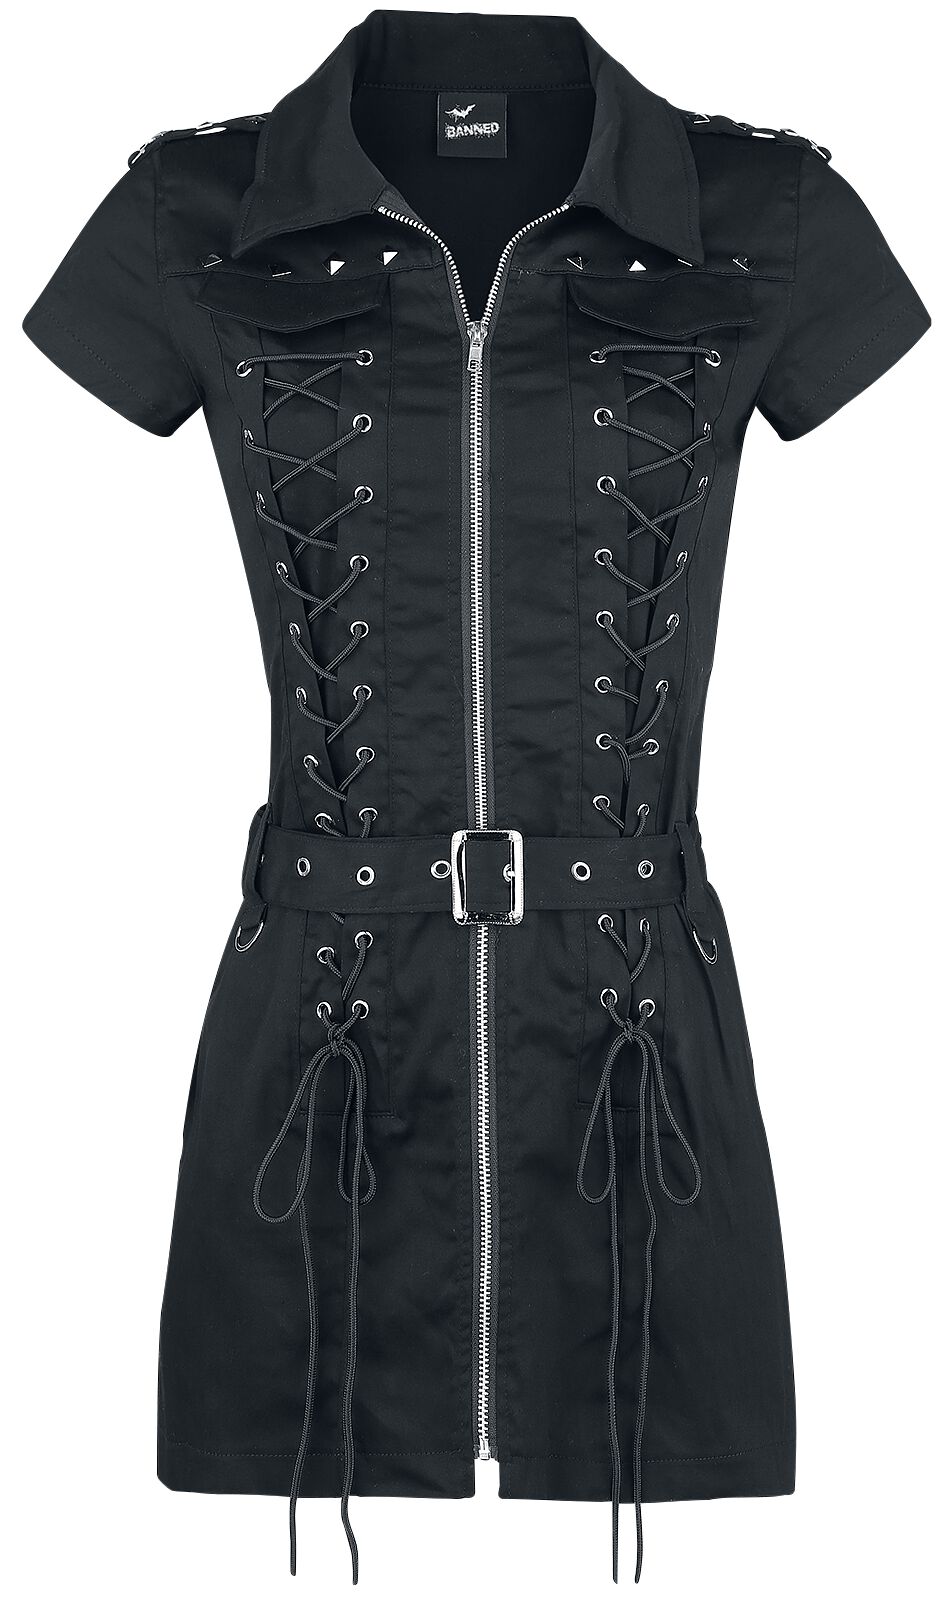 Banned Alternative Mod Dress Kurzes Kleid schwarz in S